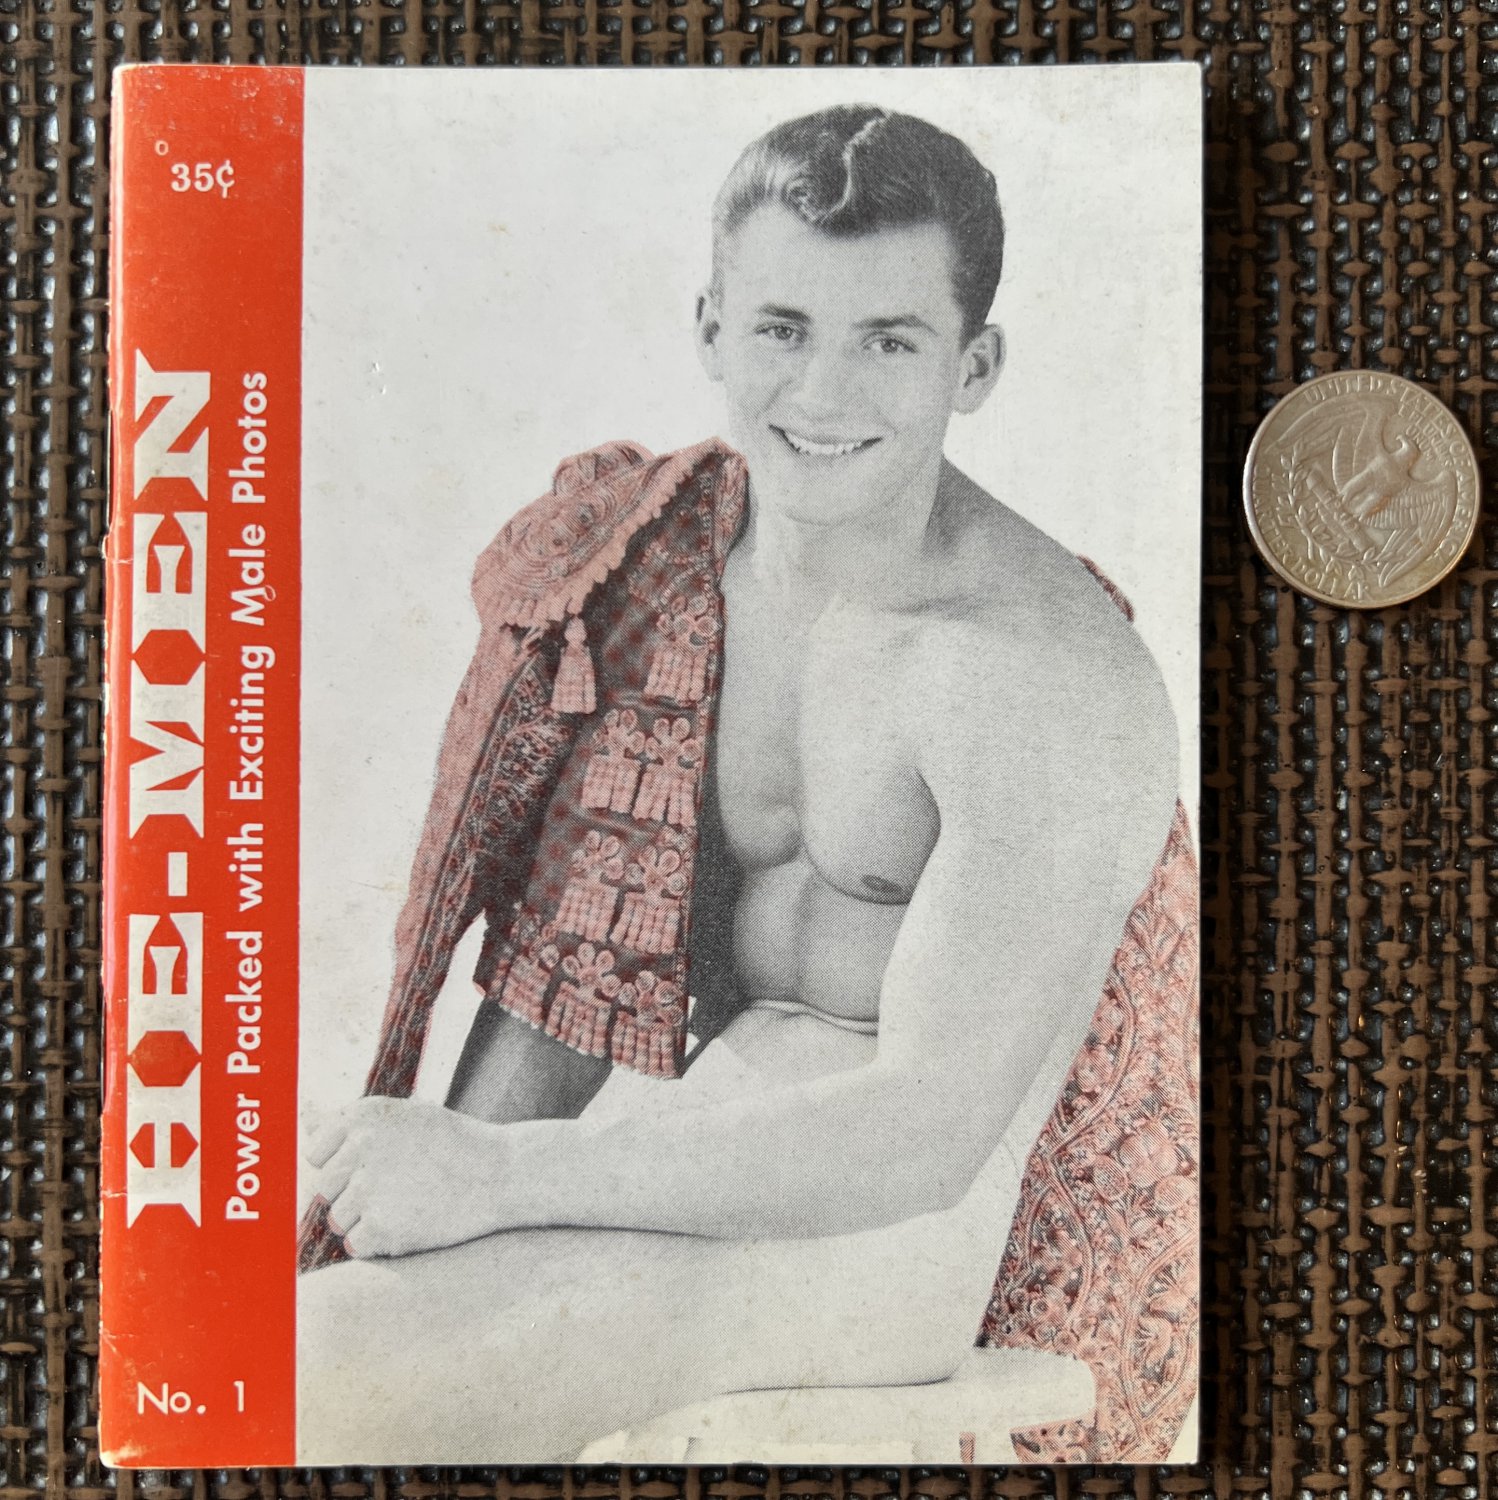 HE-MEN (1961) MUSCLE SCULPTURE Posing Strap Physique Art Photos Muscle Beefcake Male Nudes